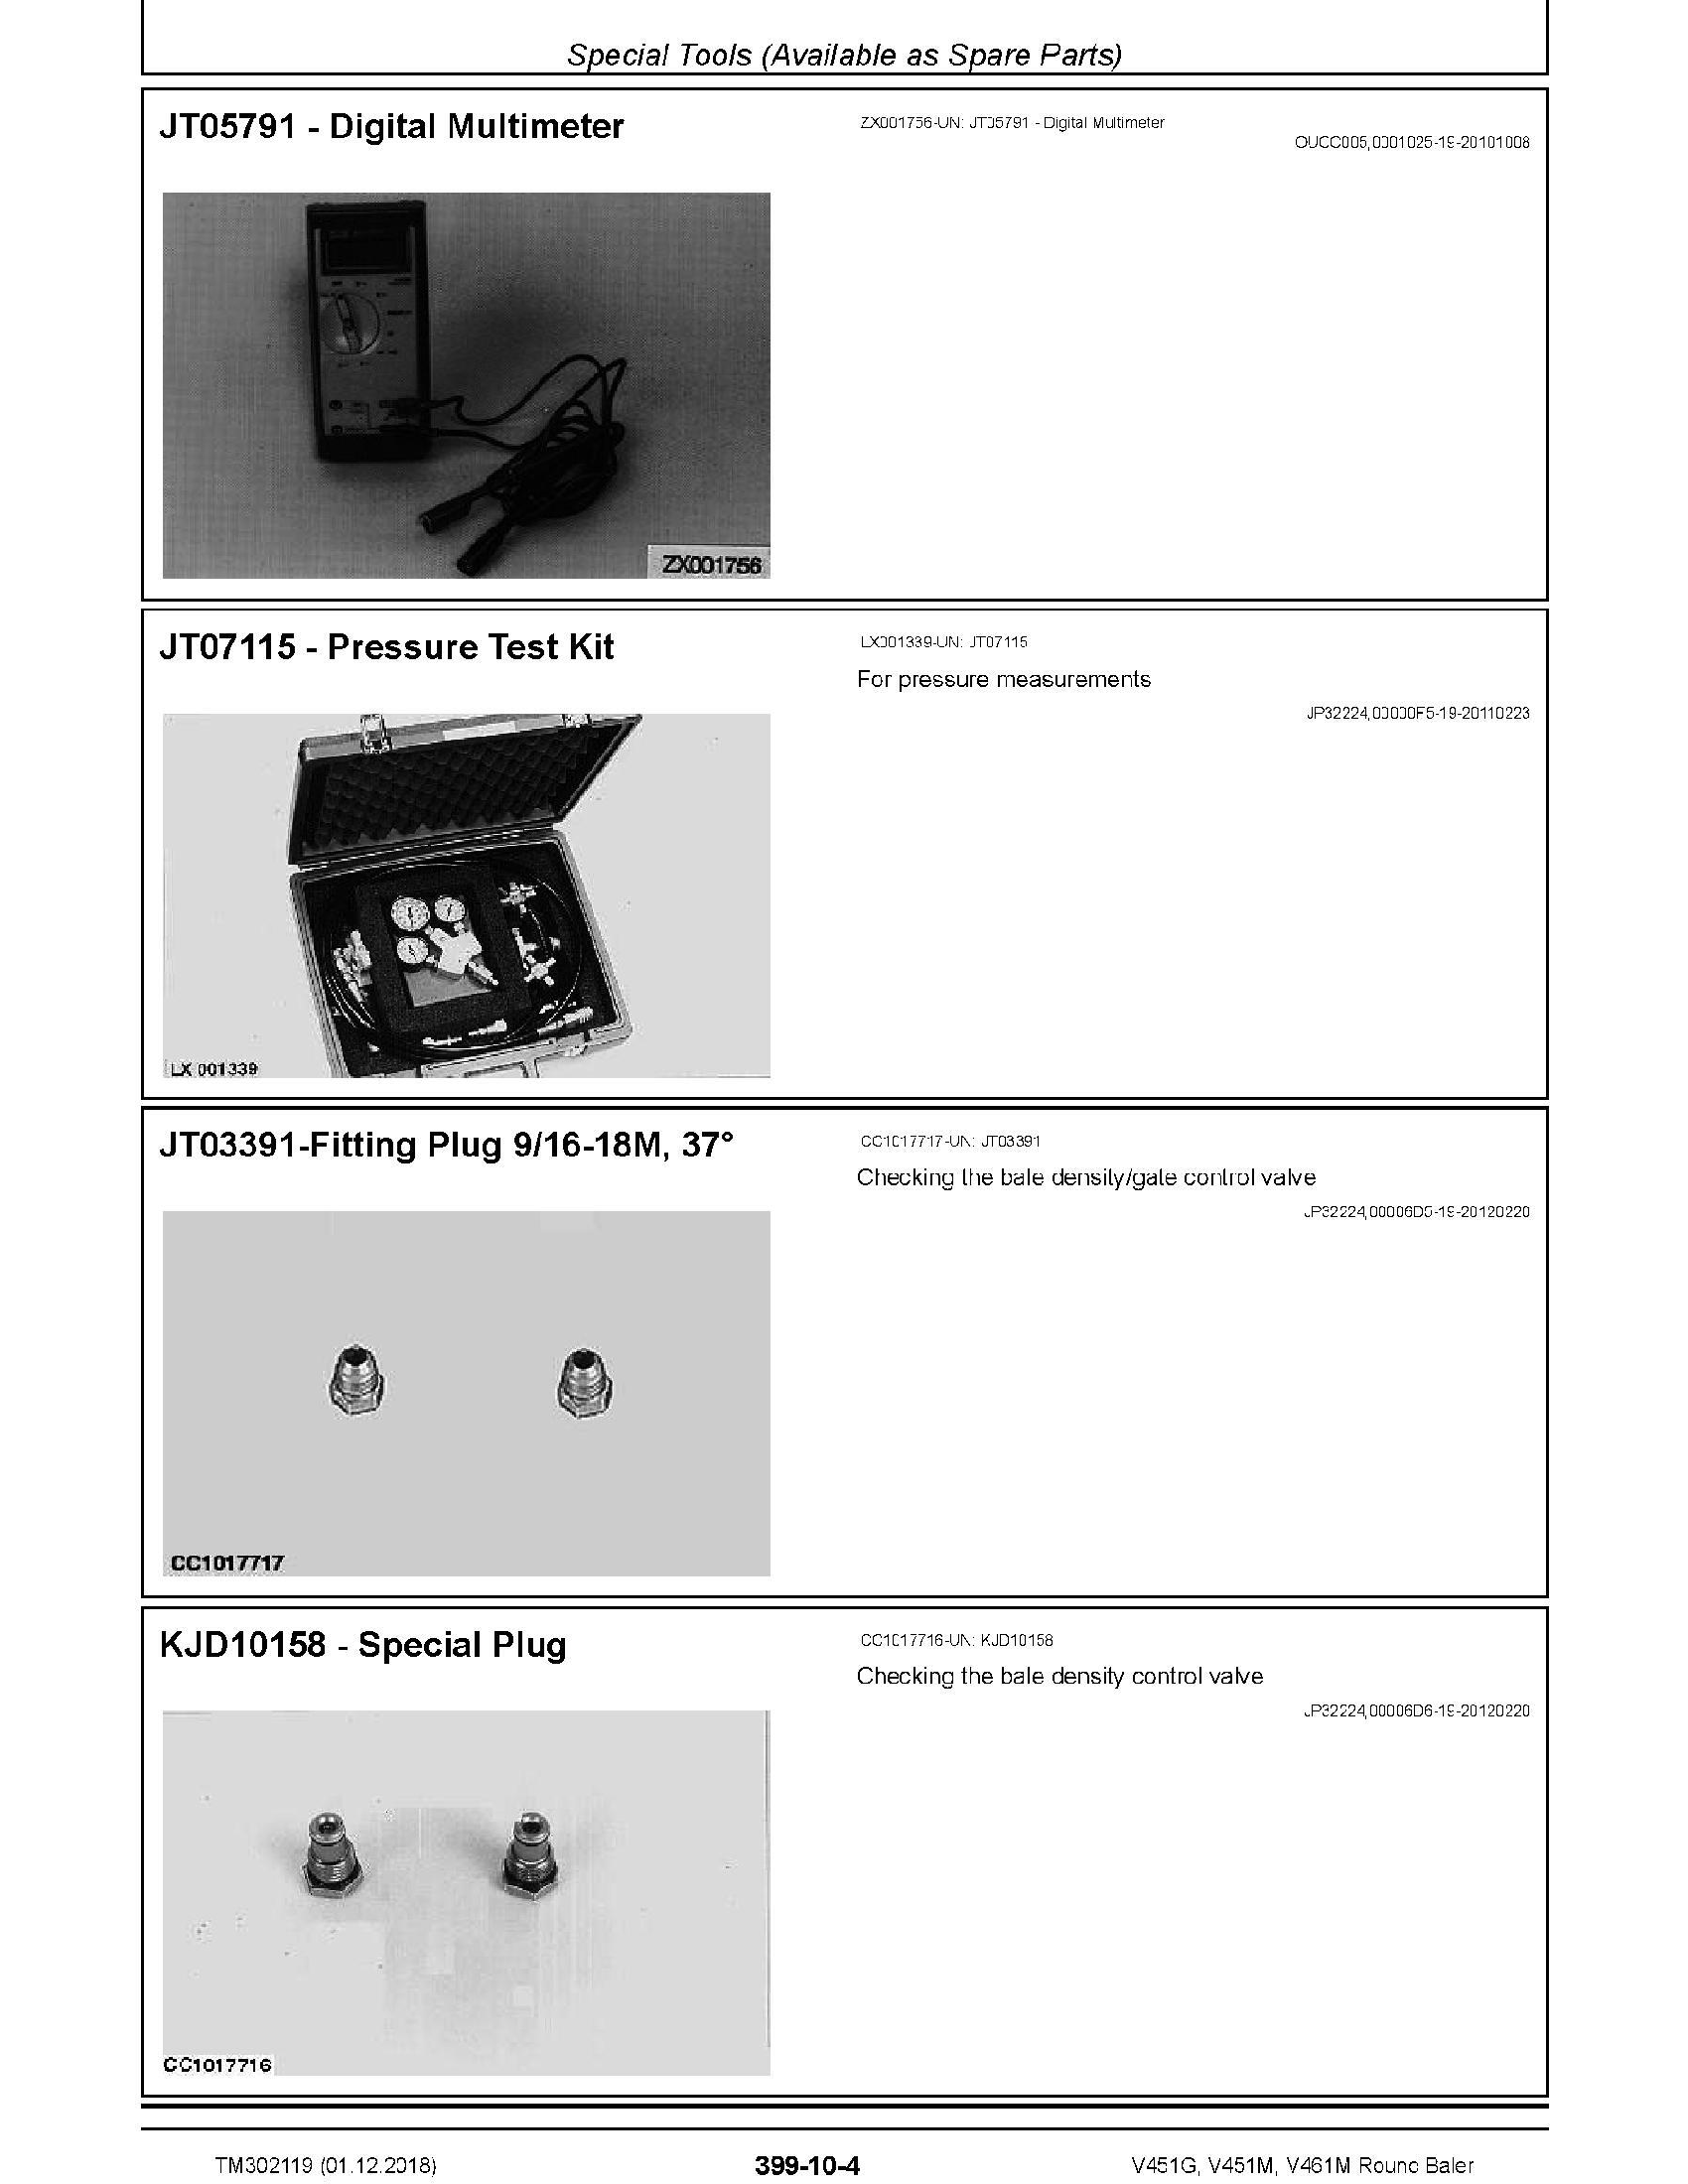 John Deere F4365 manual pdf